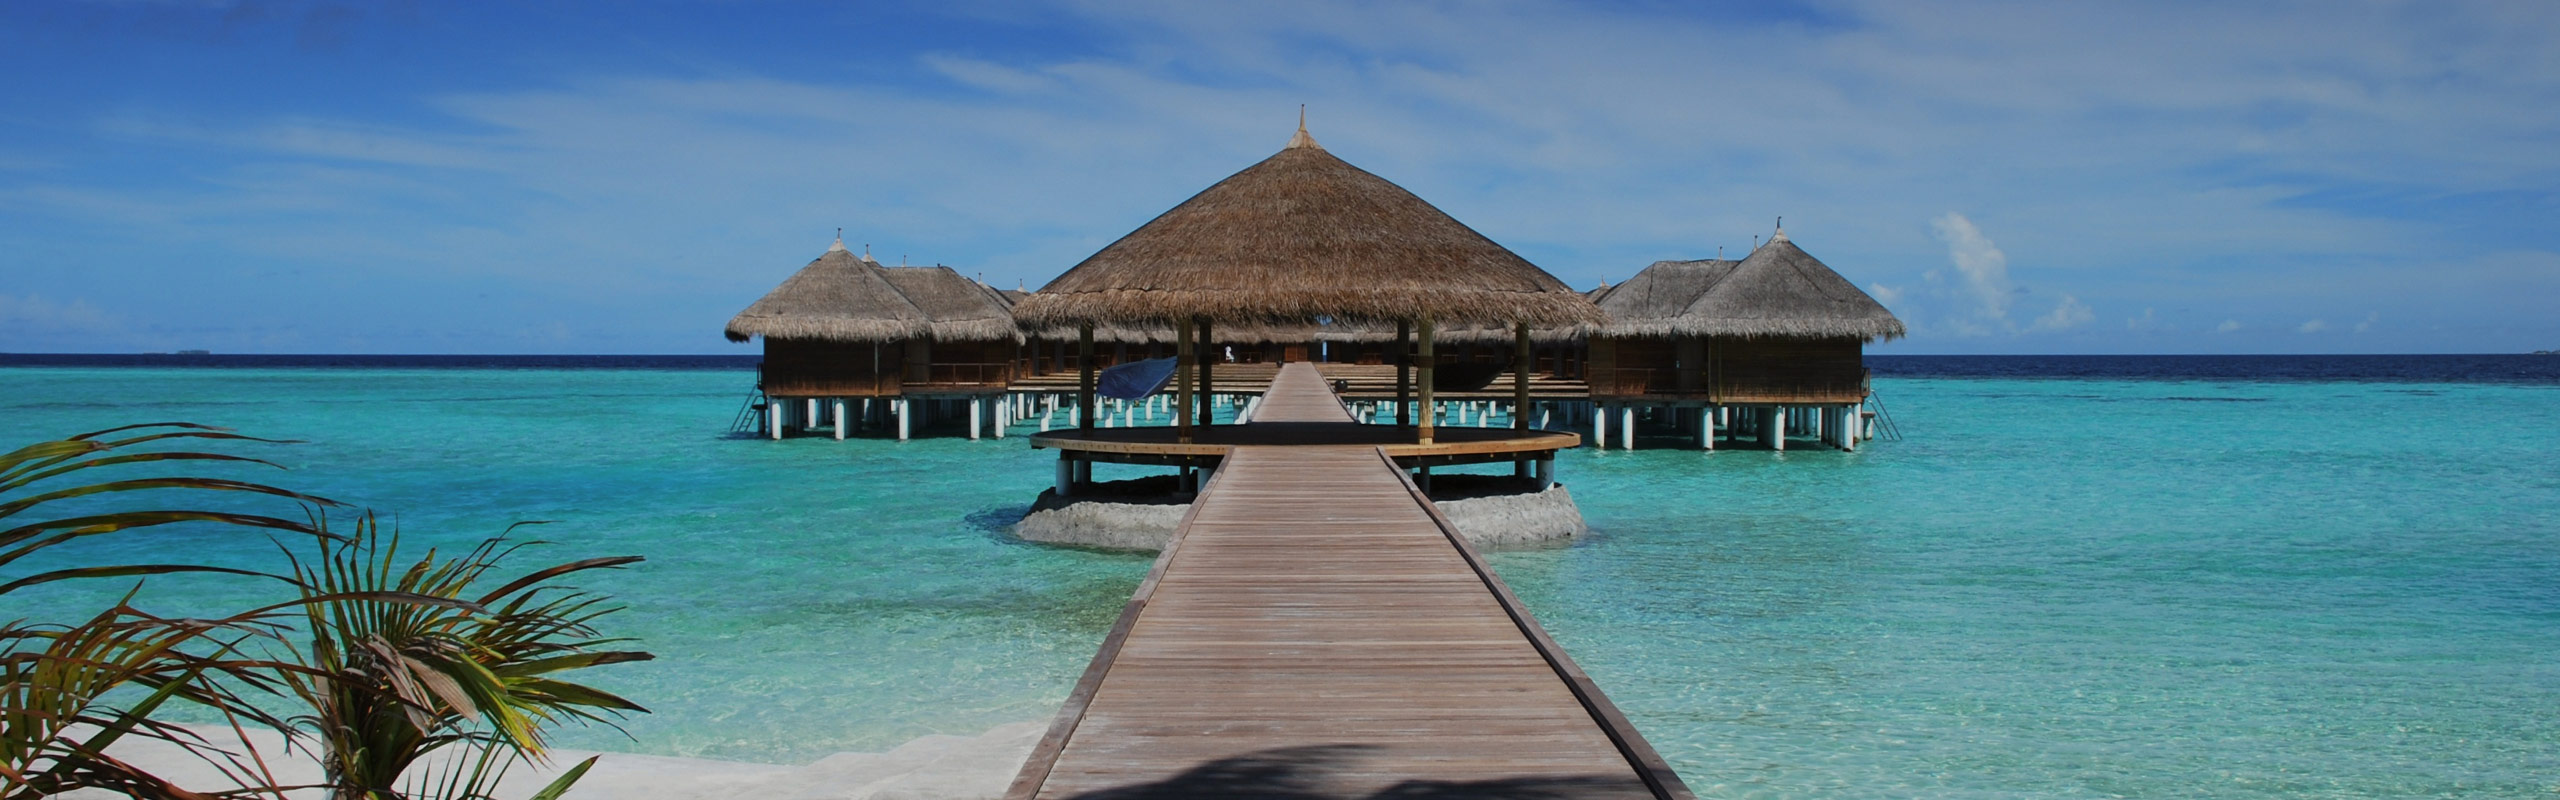 Ostrovný raj Maledivy